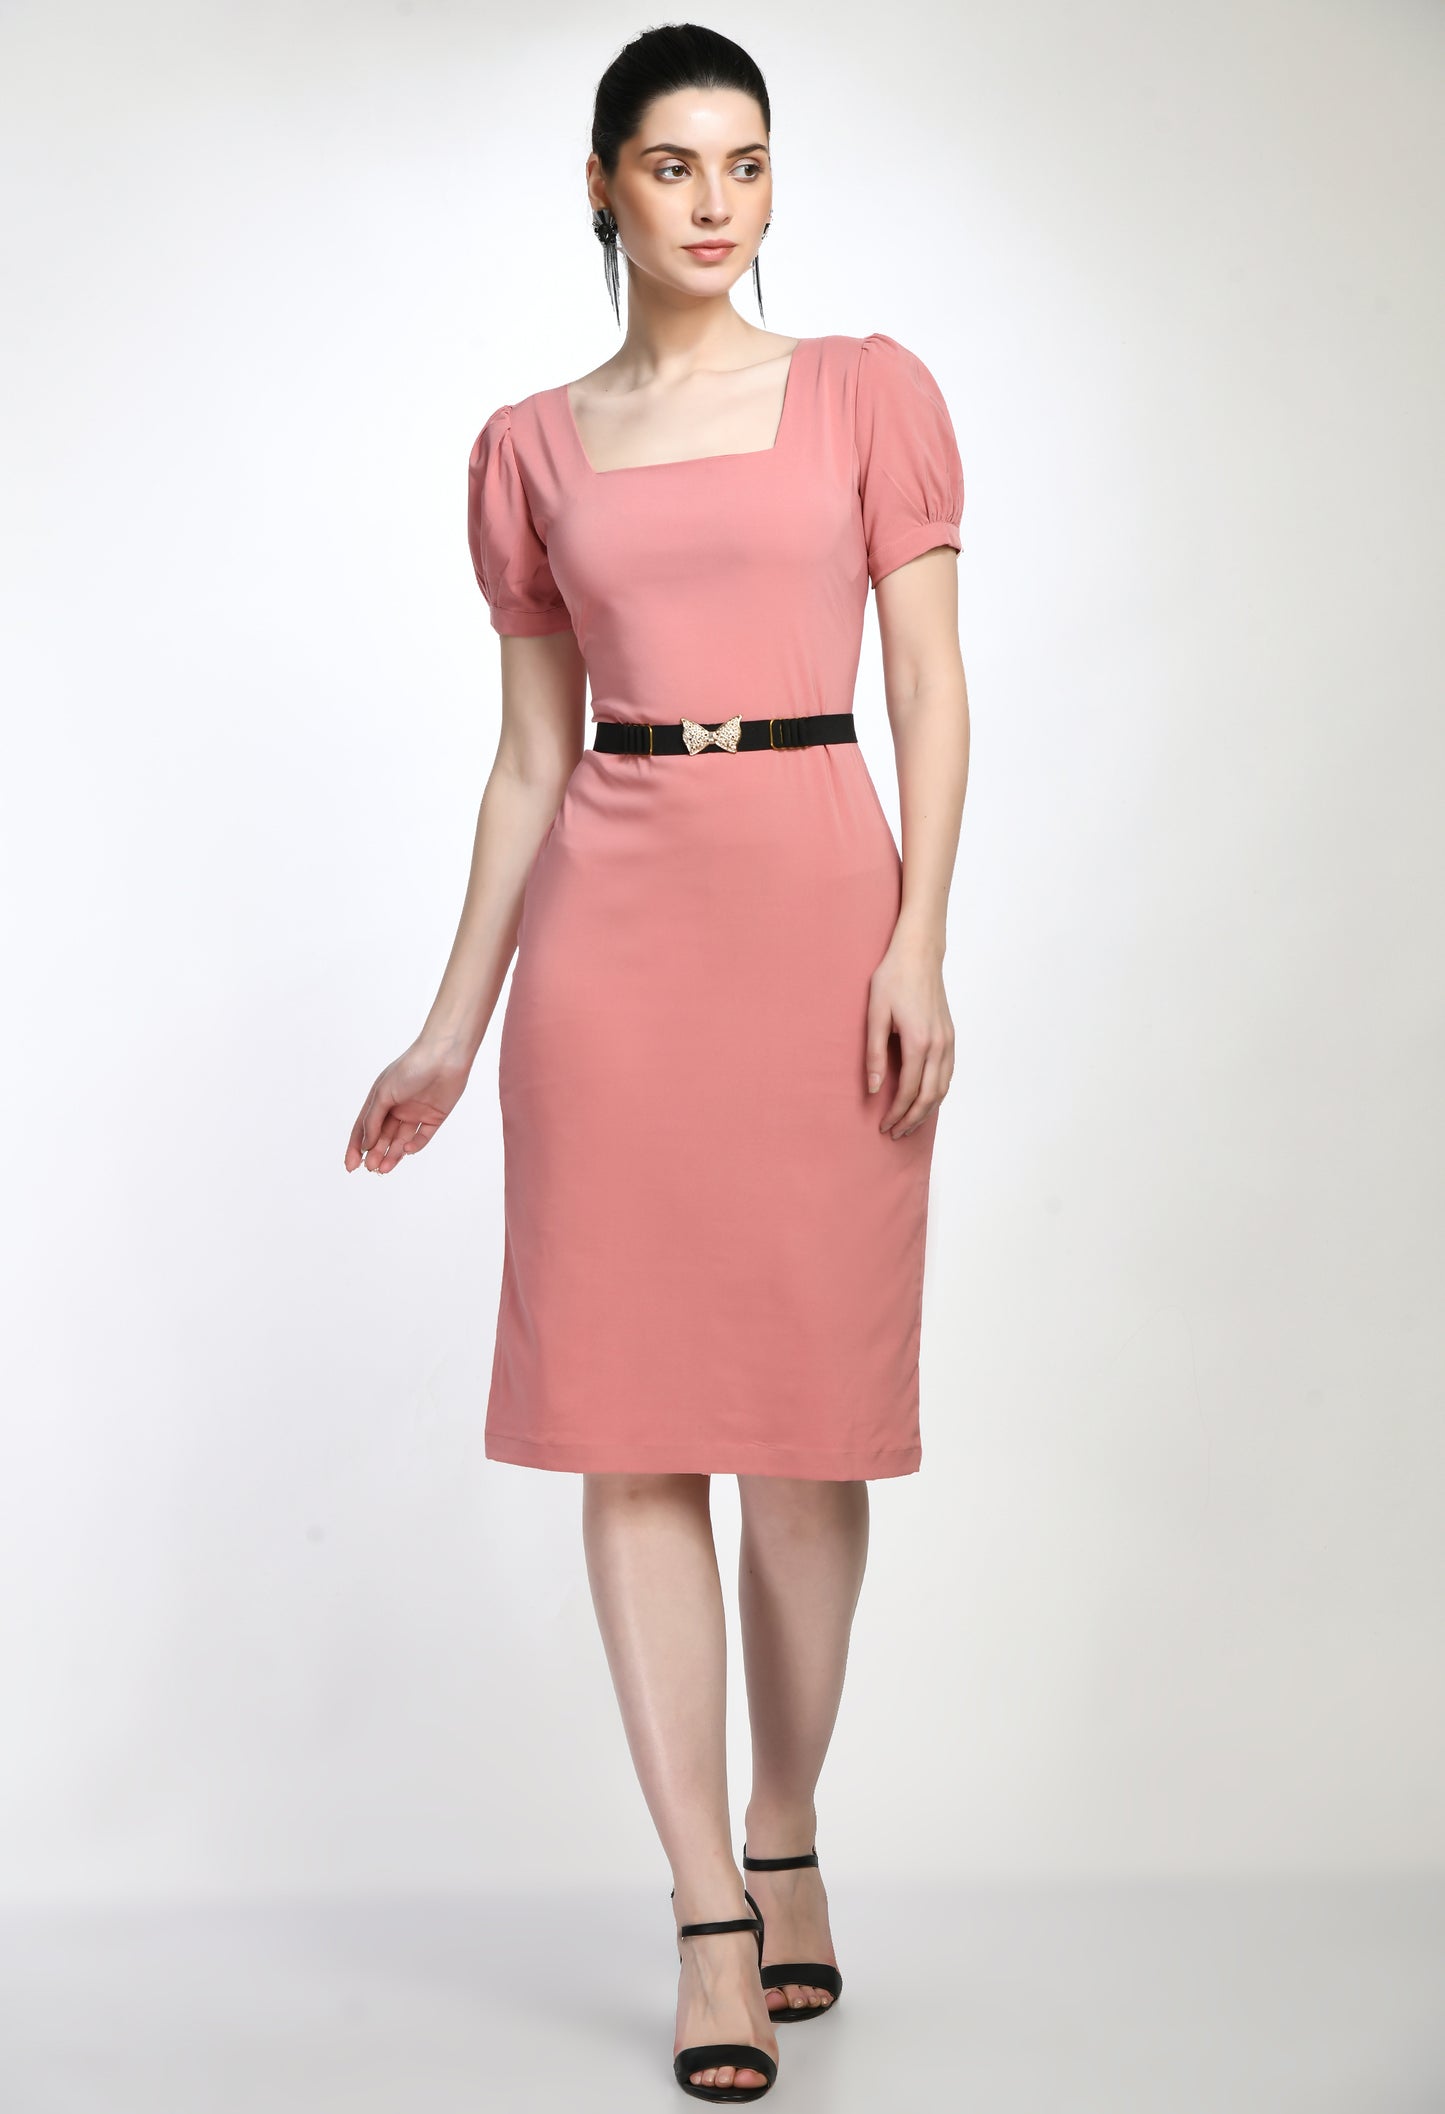 Peach Bodycone Cotton Spandex Dress with Belt